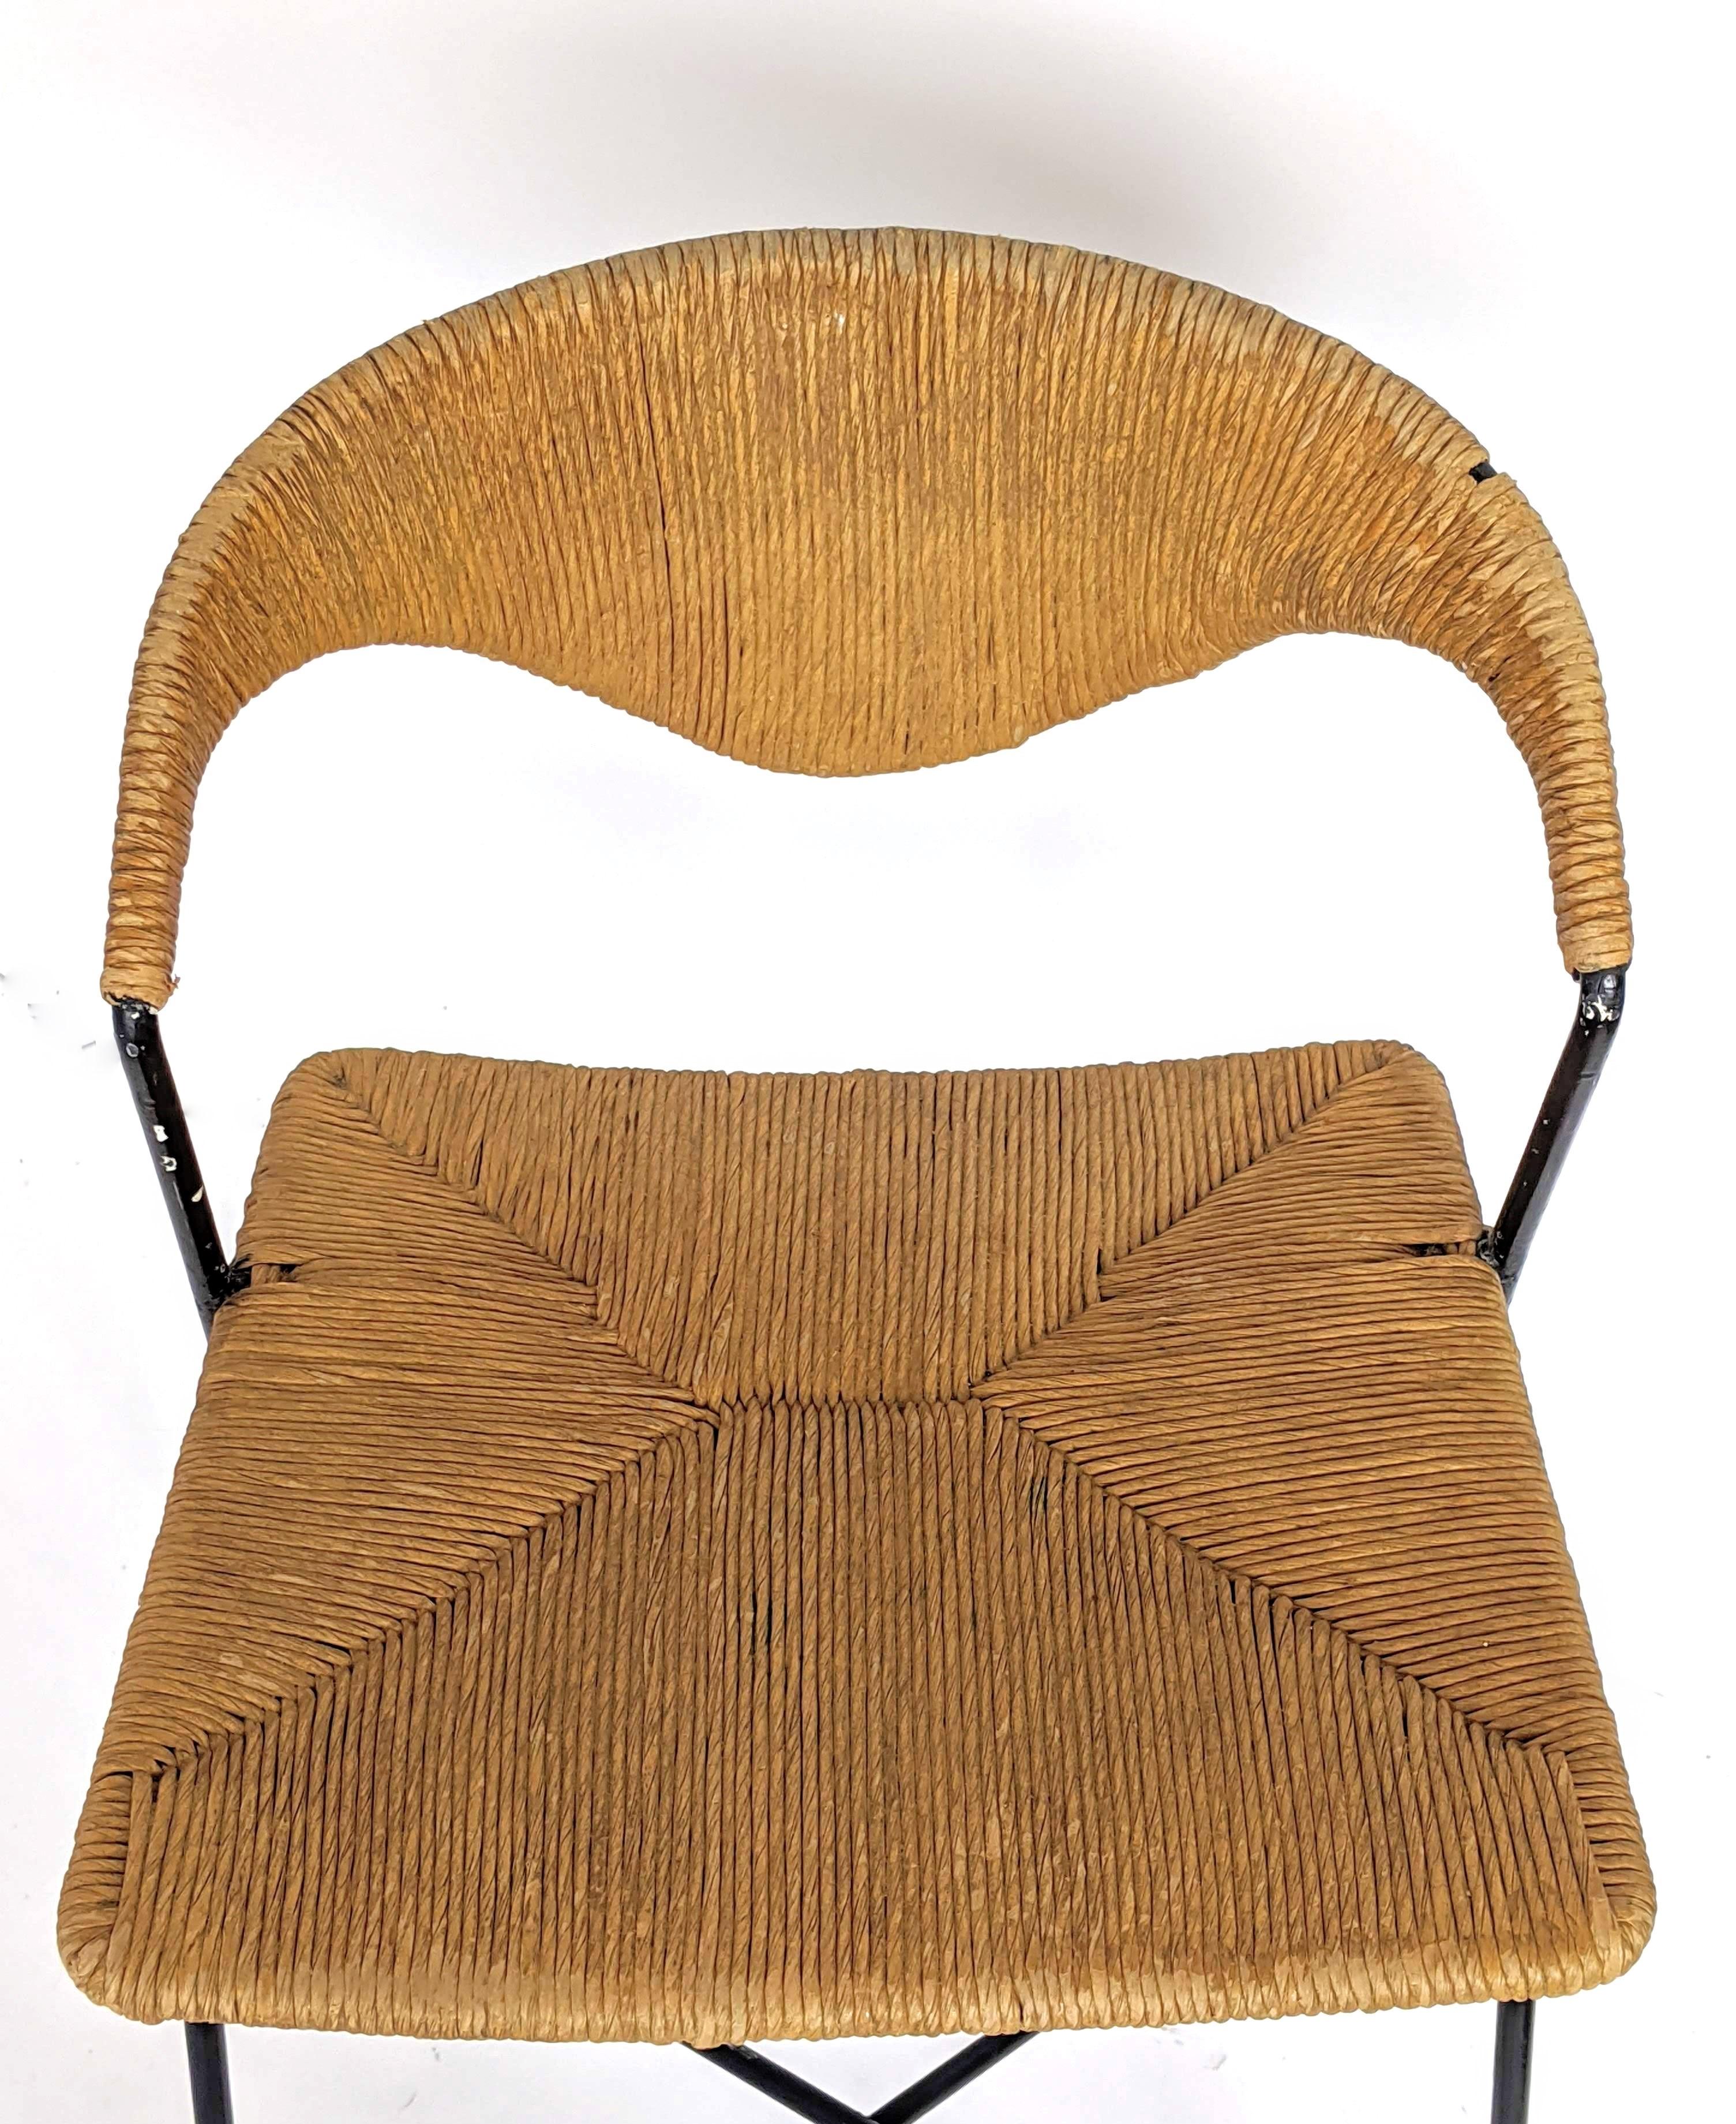 1950s Arthur Umanoff Wicker & Steel Rod High Chair, USA For Sale 3